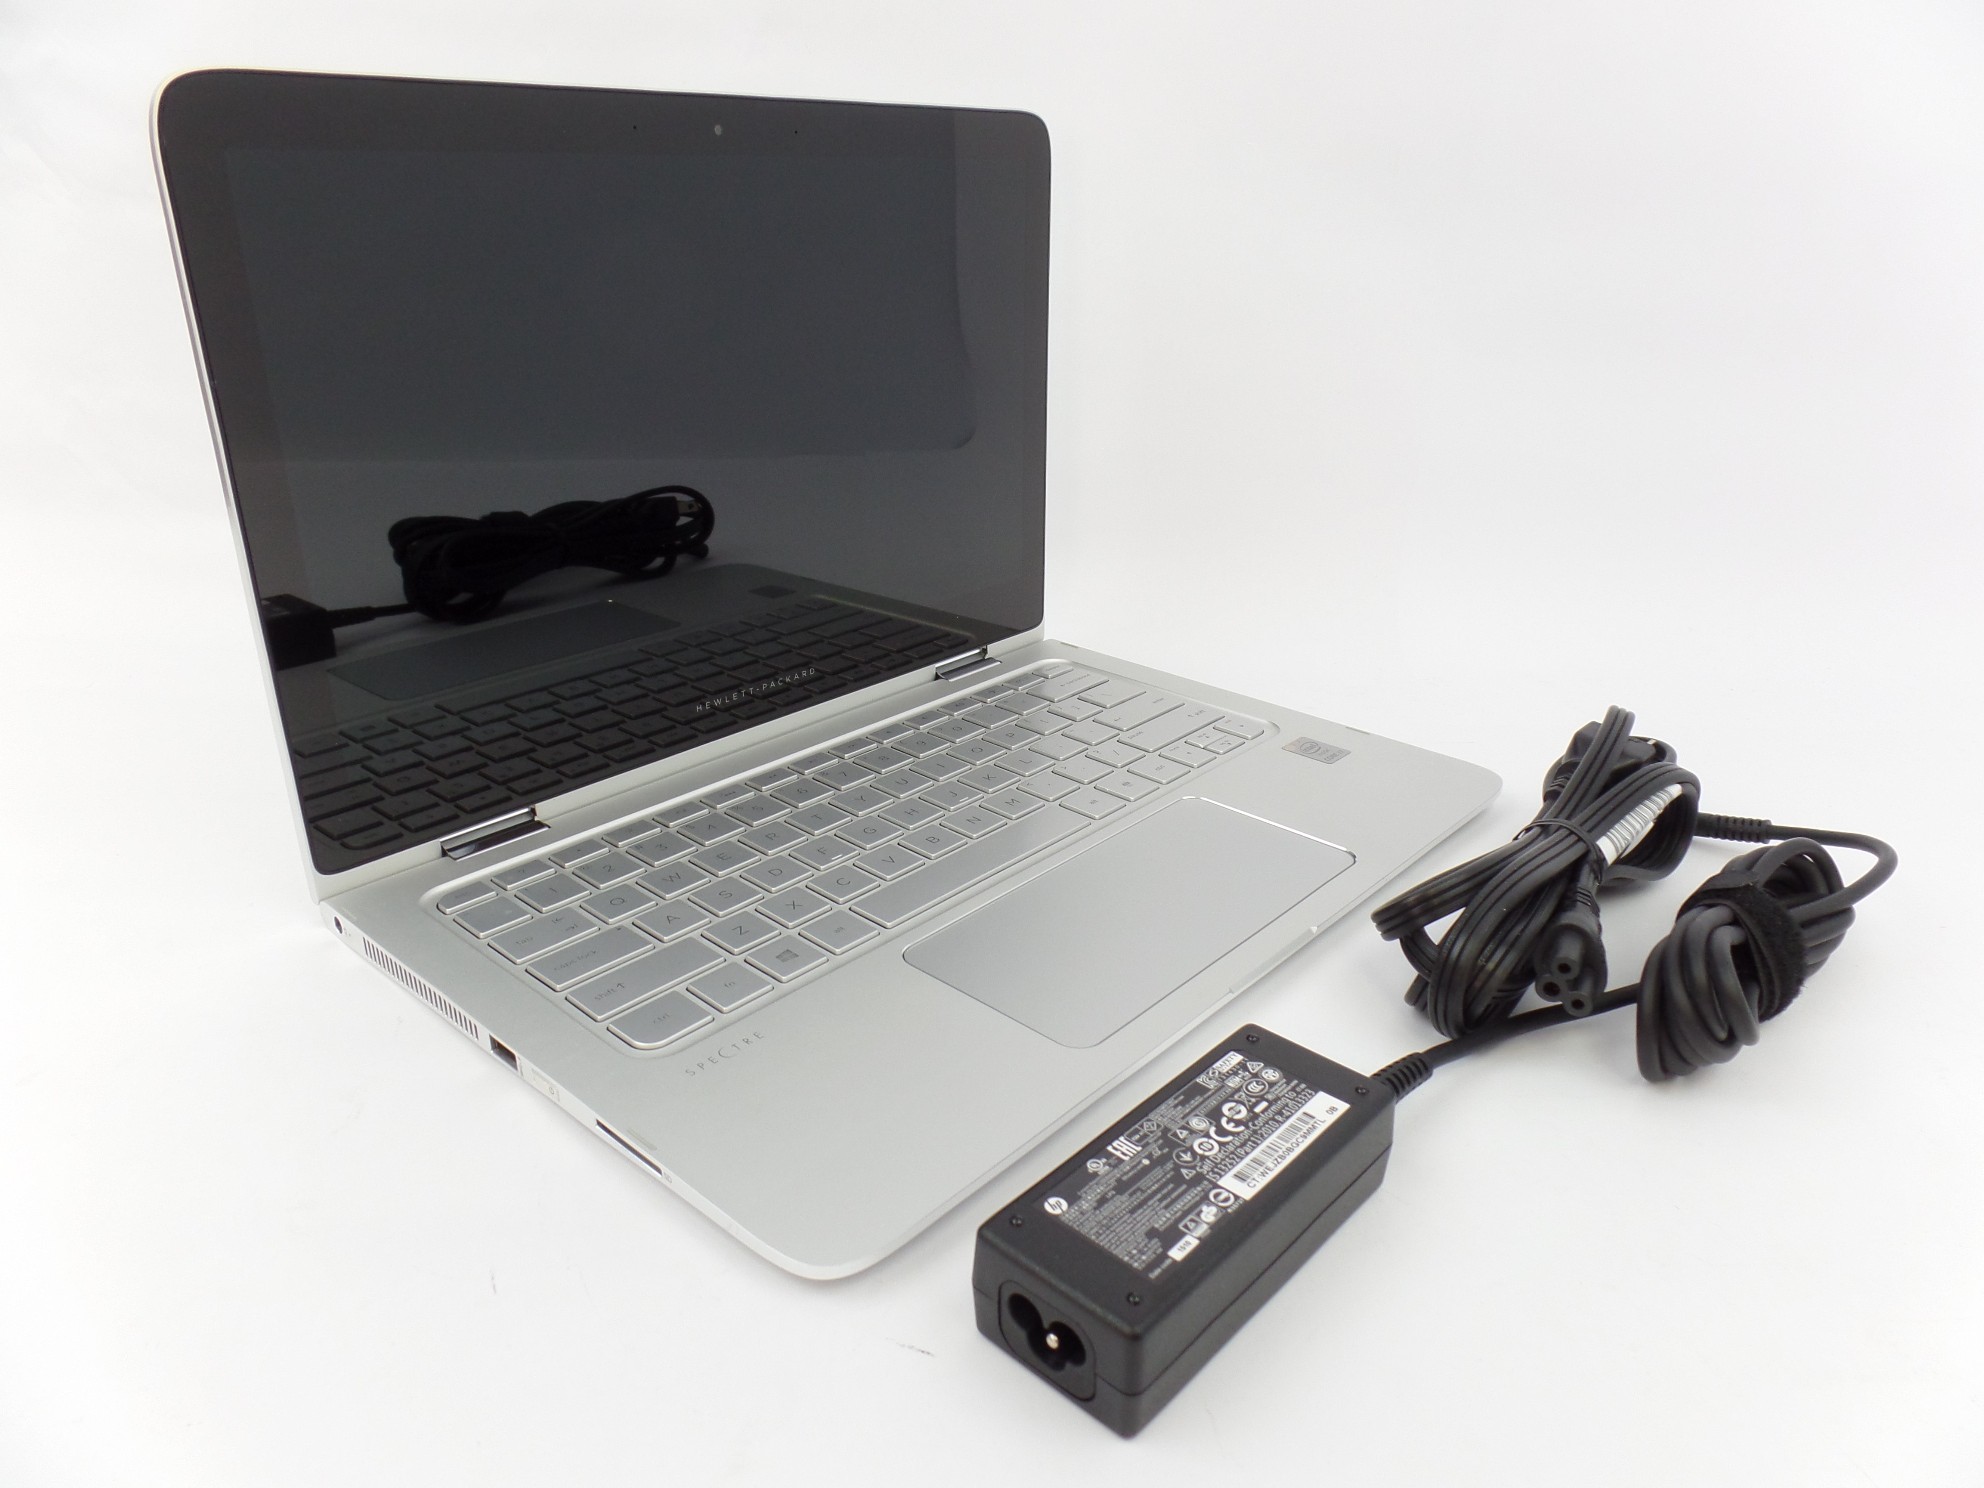 HP Spectre x360 13-4005dx 13" WQHD Touch i7-5500U 8GB 512GB SSD W10H 2in1 Laptop